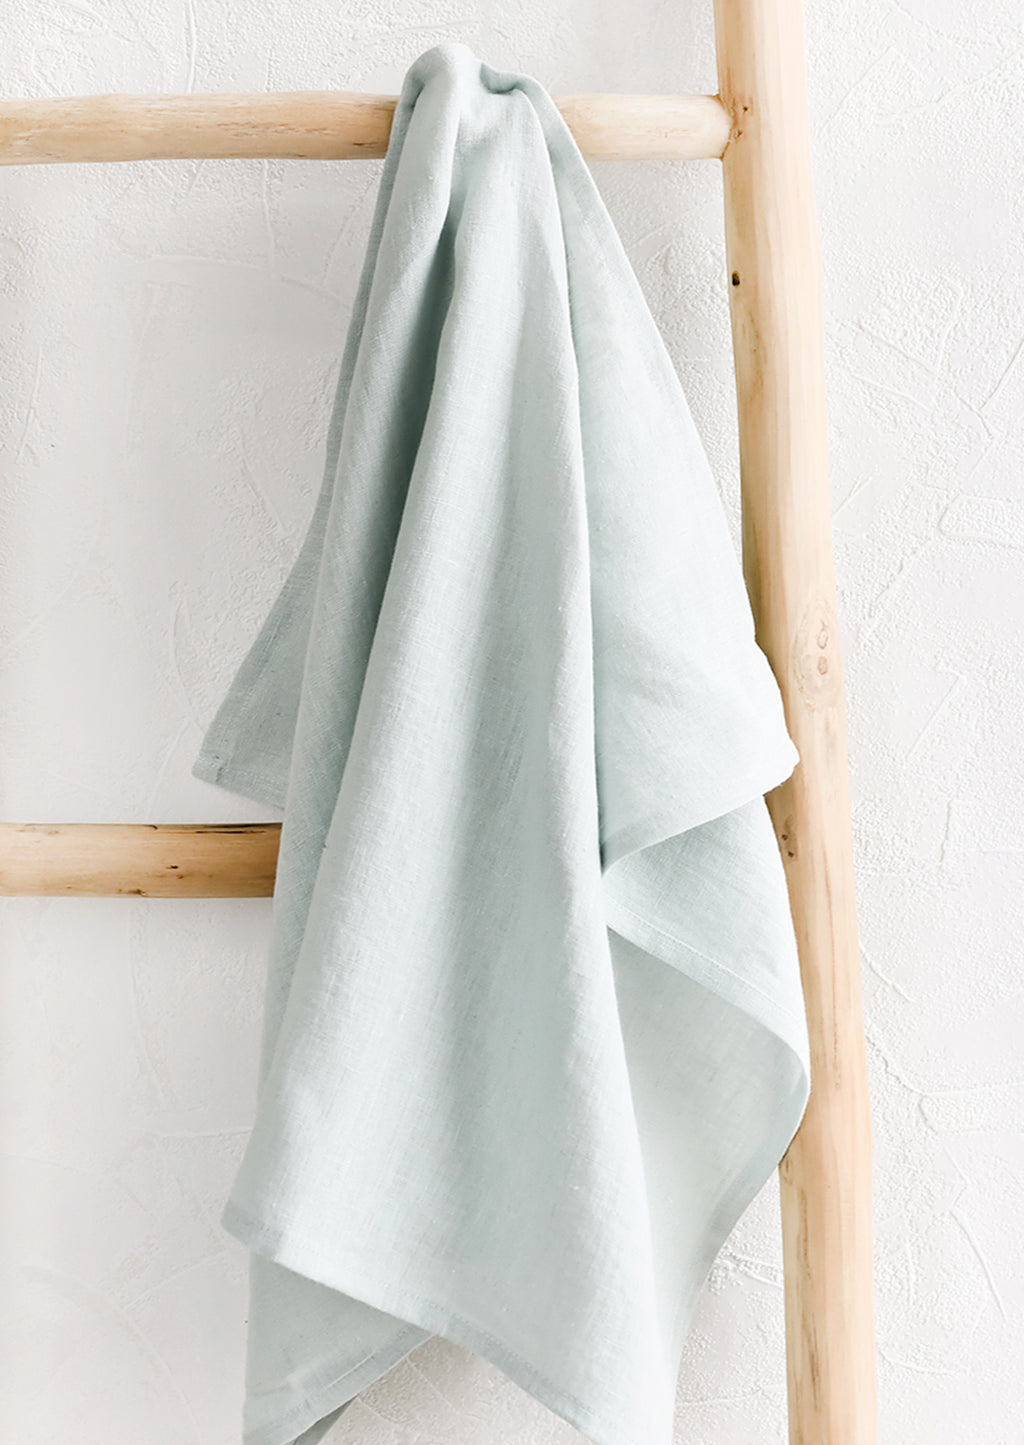 Seafoam: A seafoam linen tea towel draped on a wooden ladder.